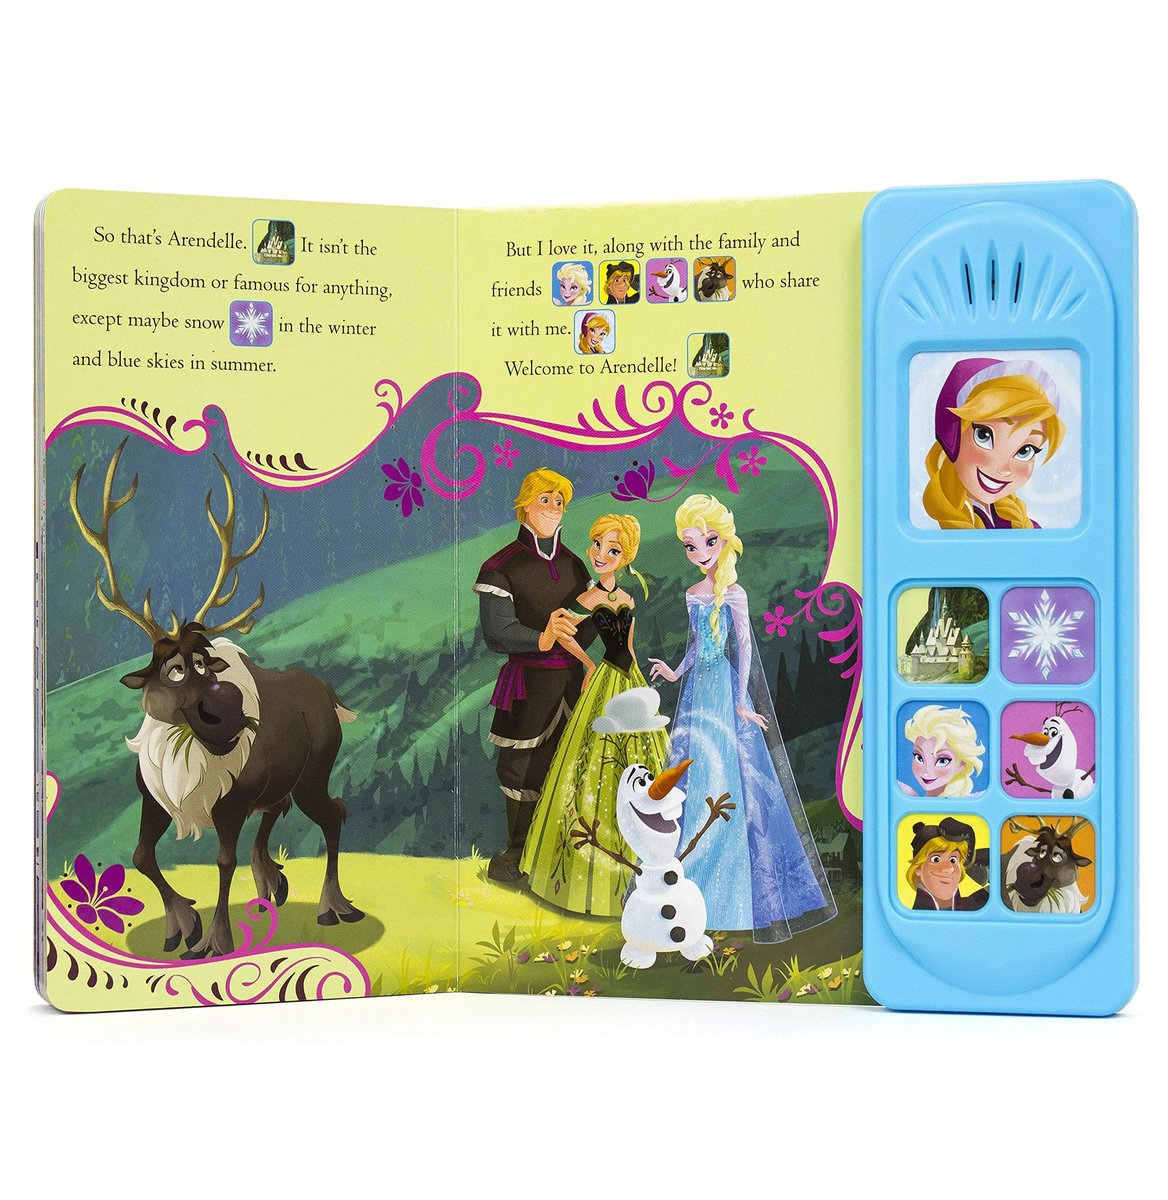 2014, Children's Board Books / Other for sale online Kids Staff Disney I Frozen by P 